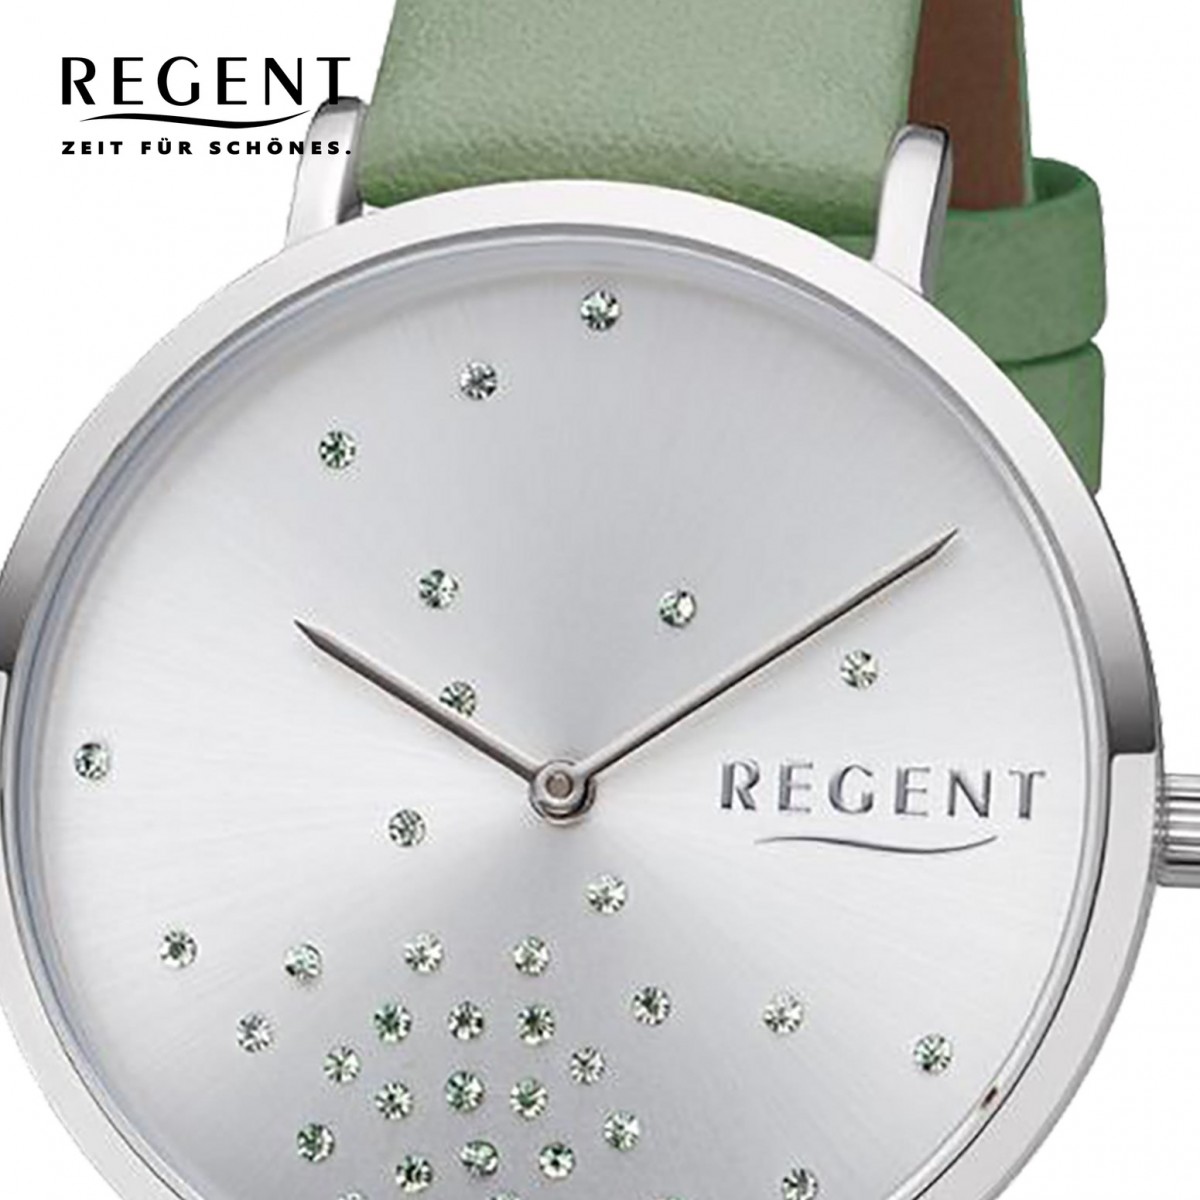 Analog URBA598 Leder Damen BA-598 Armbanduhr Quarz-Uhr grün Regent